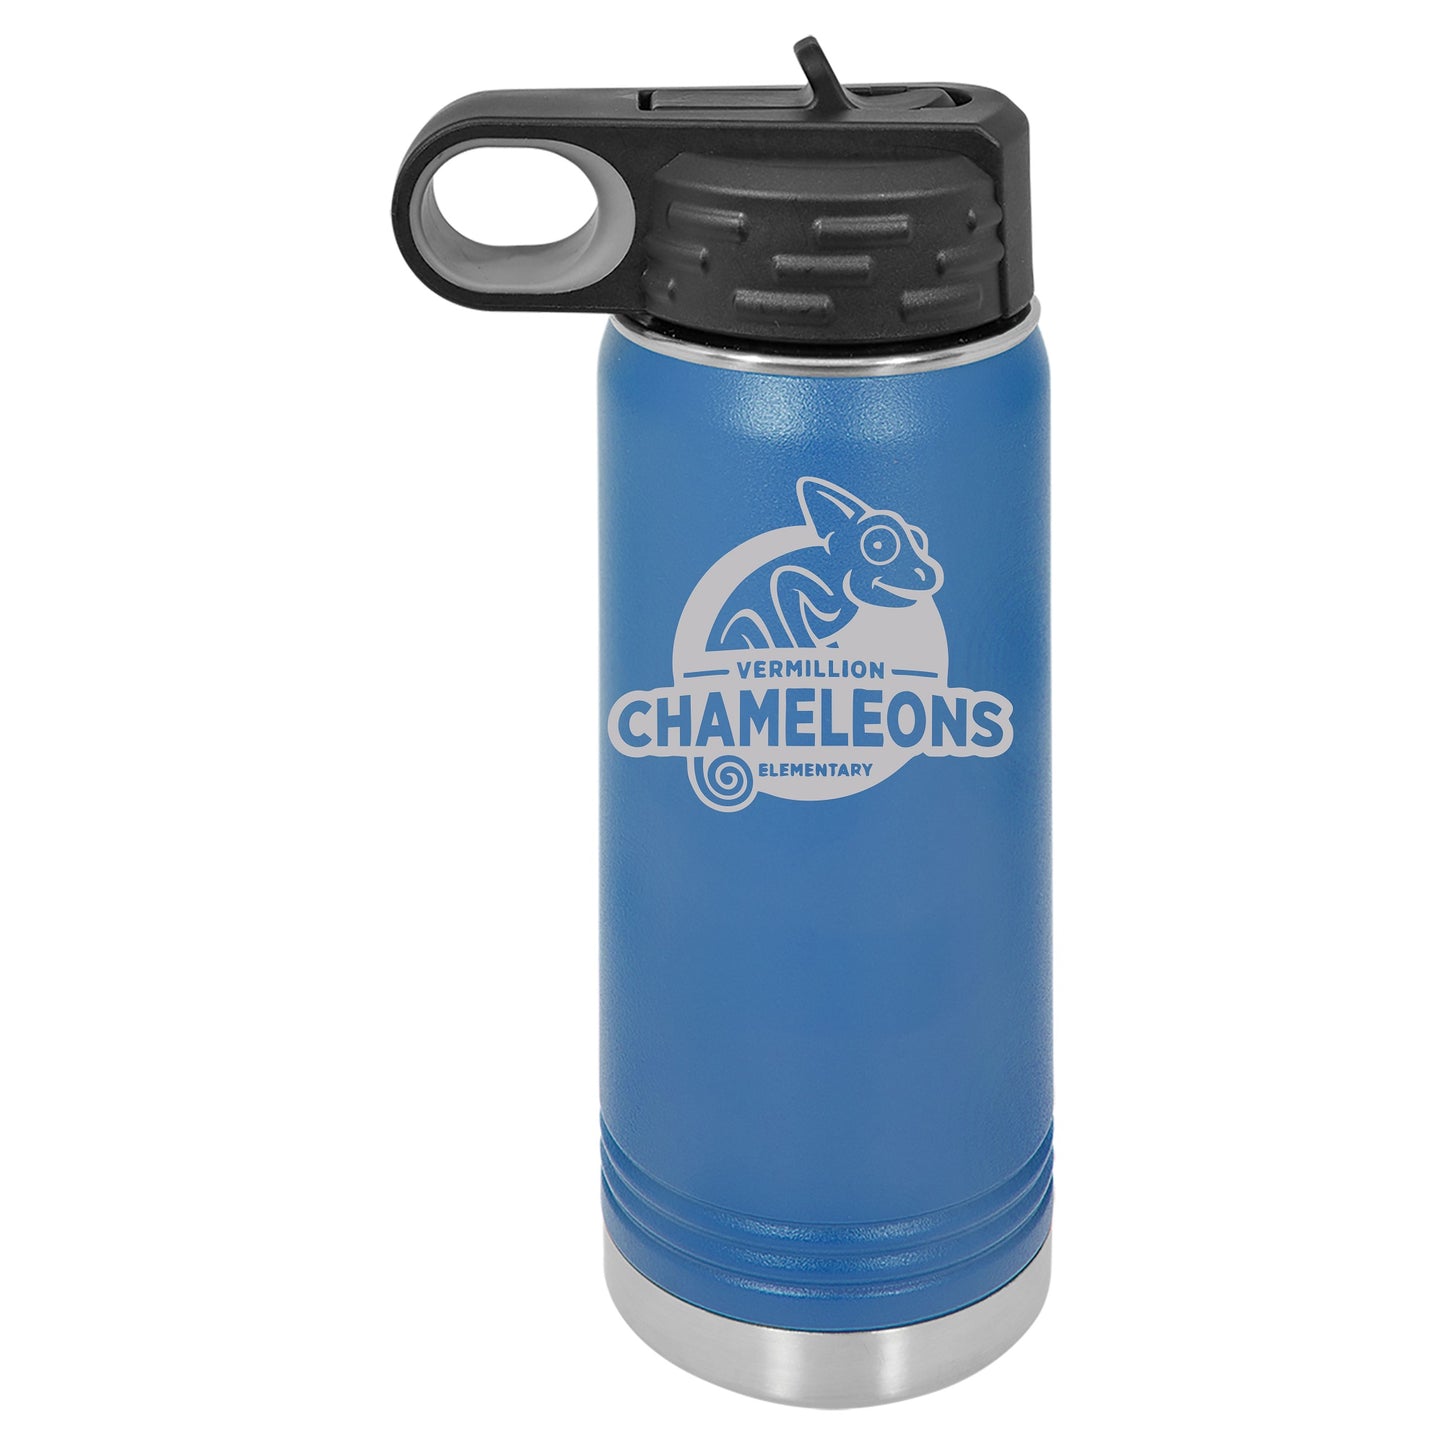 VES-Vermillion Chameleon Water Bottles and Tumblers